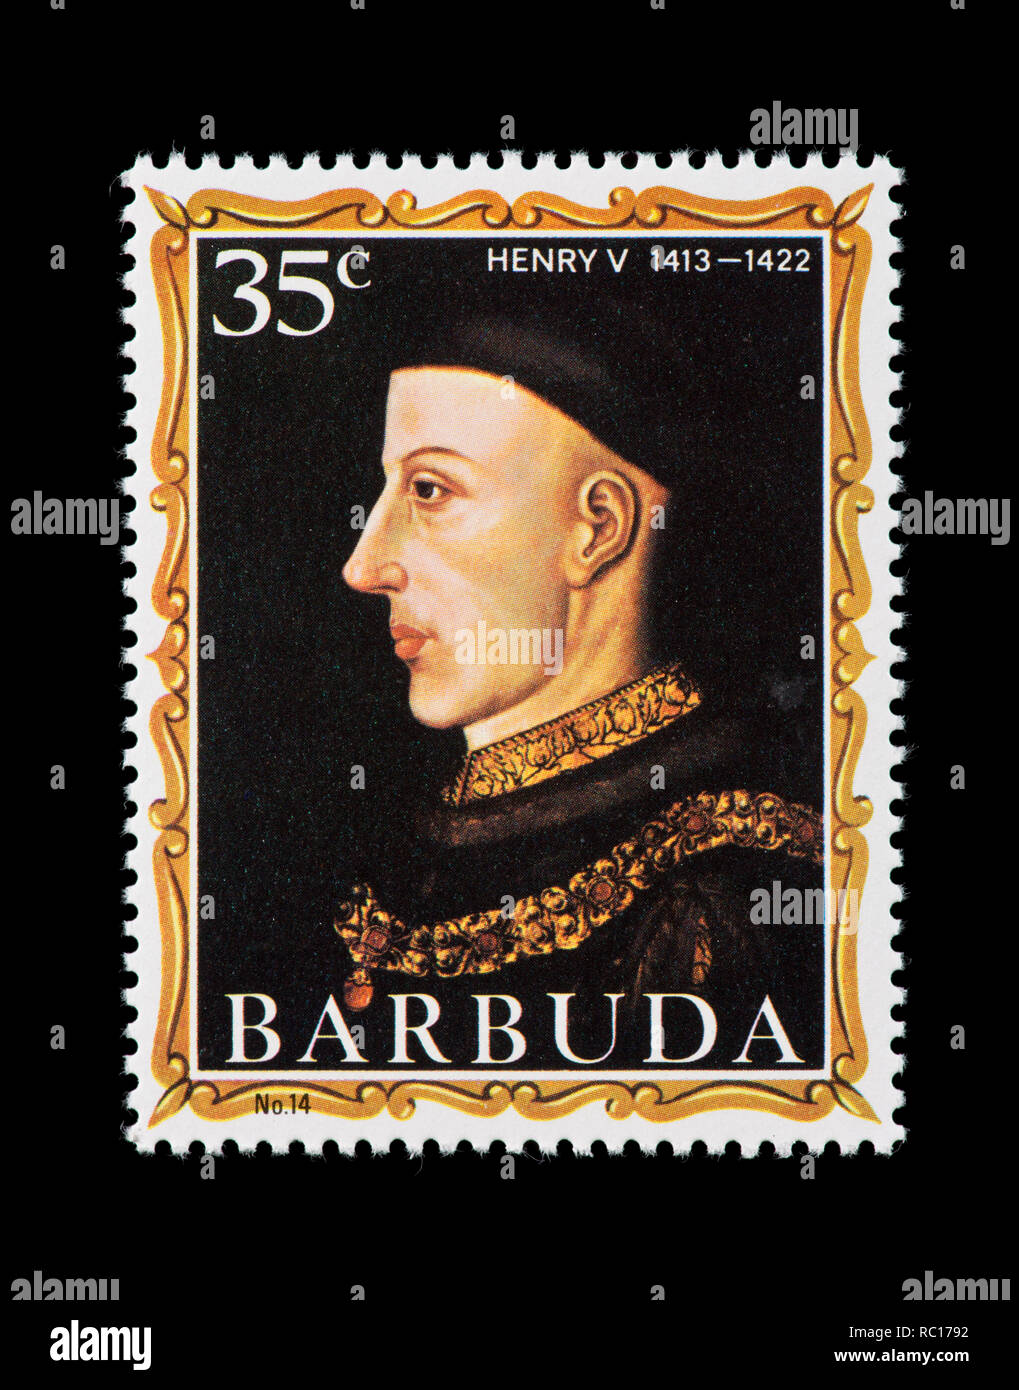 Postage stamp from Barbuda depicting Henry V, former king of England Stock Photo